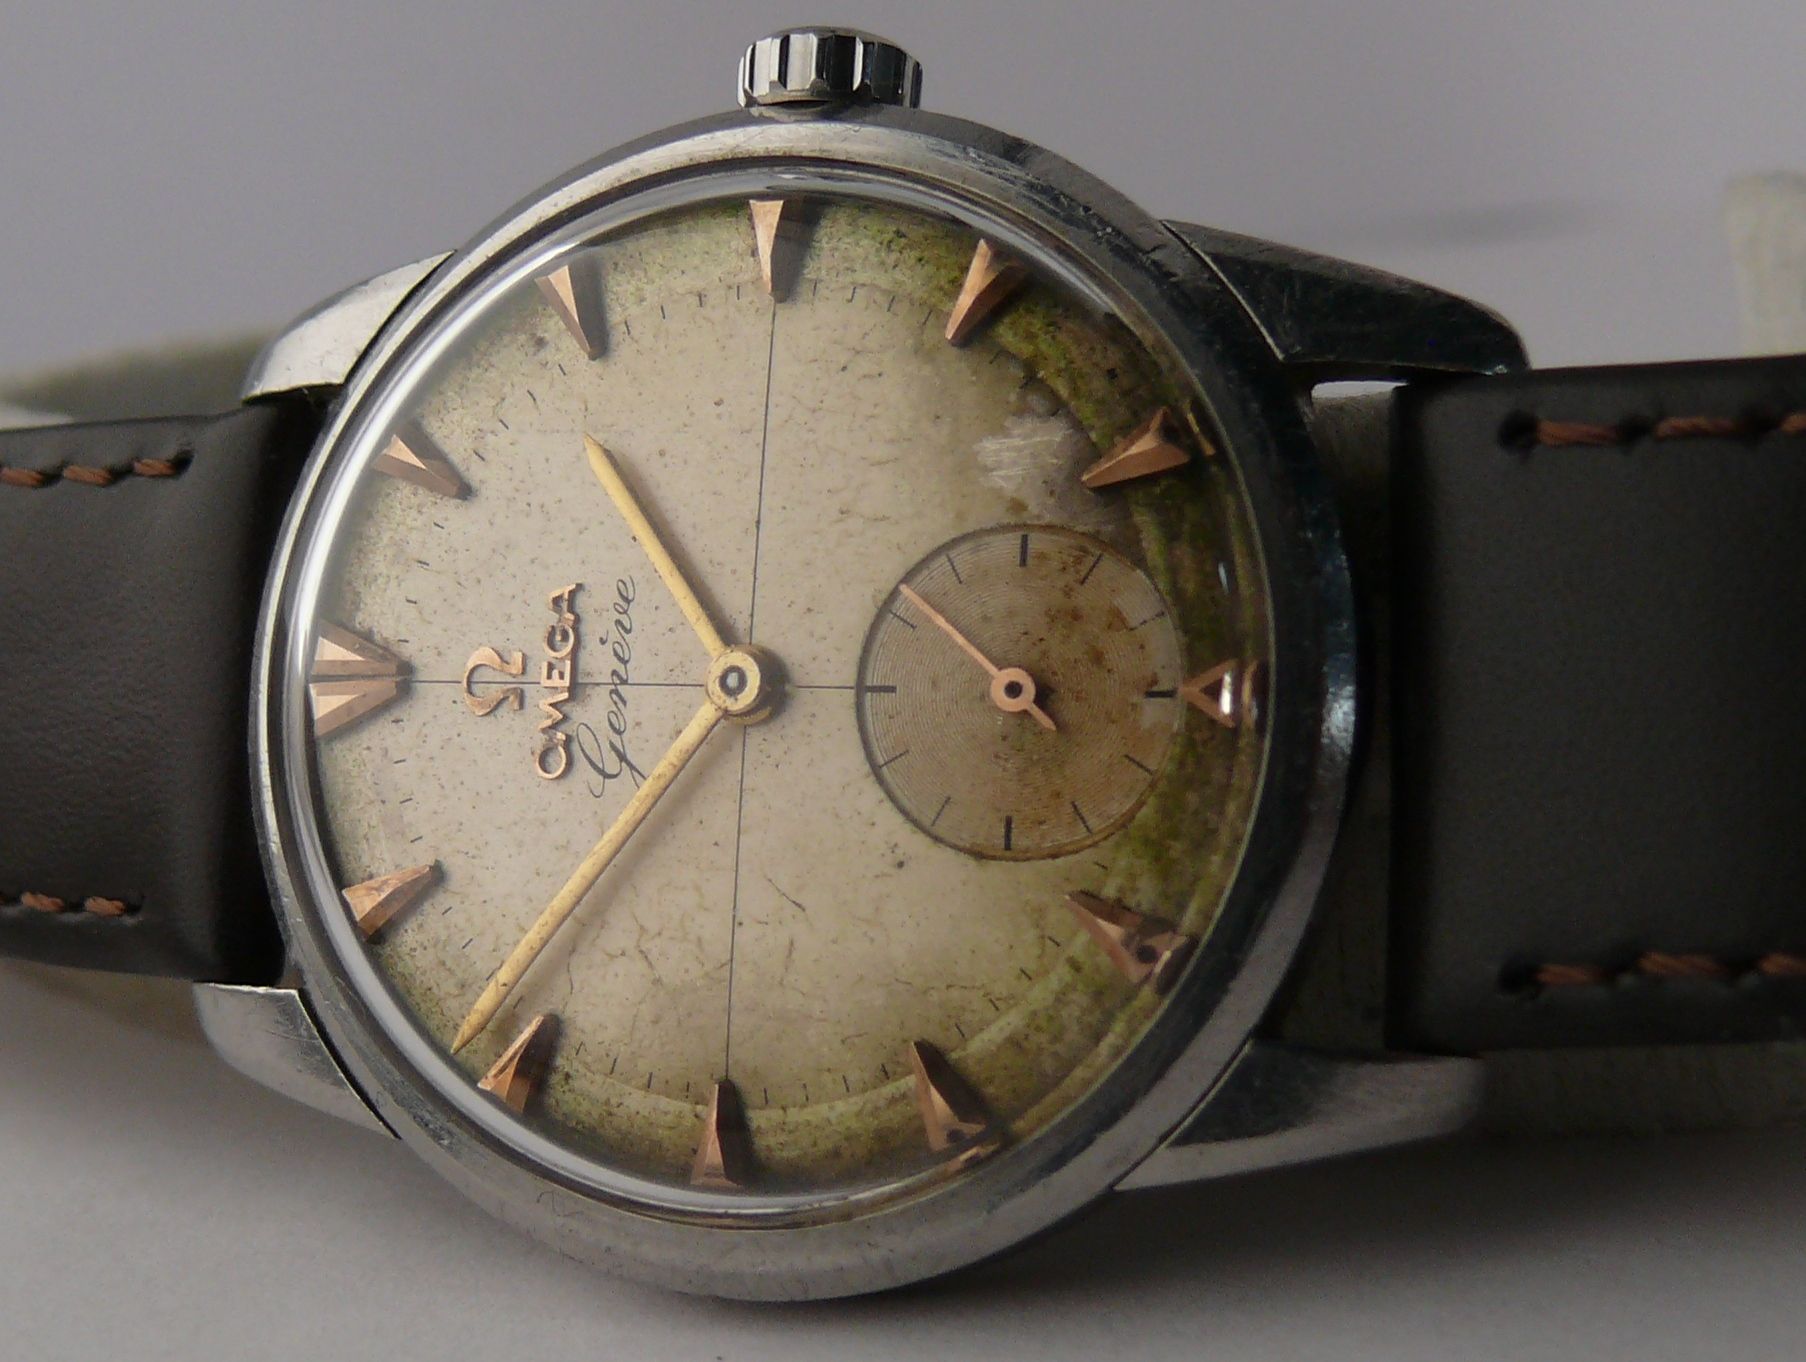 1959 Vintage Gents Omega Geneva Manual Wind Wristwatch Ref 2903. Original dial shows even patina - Image 3 of 7